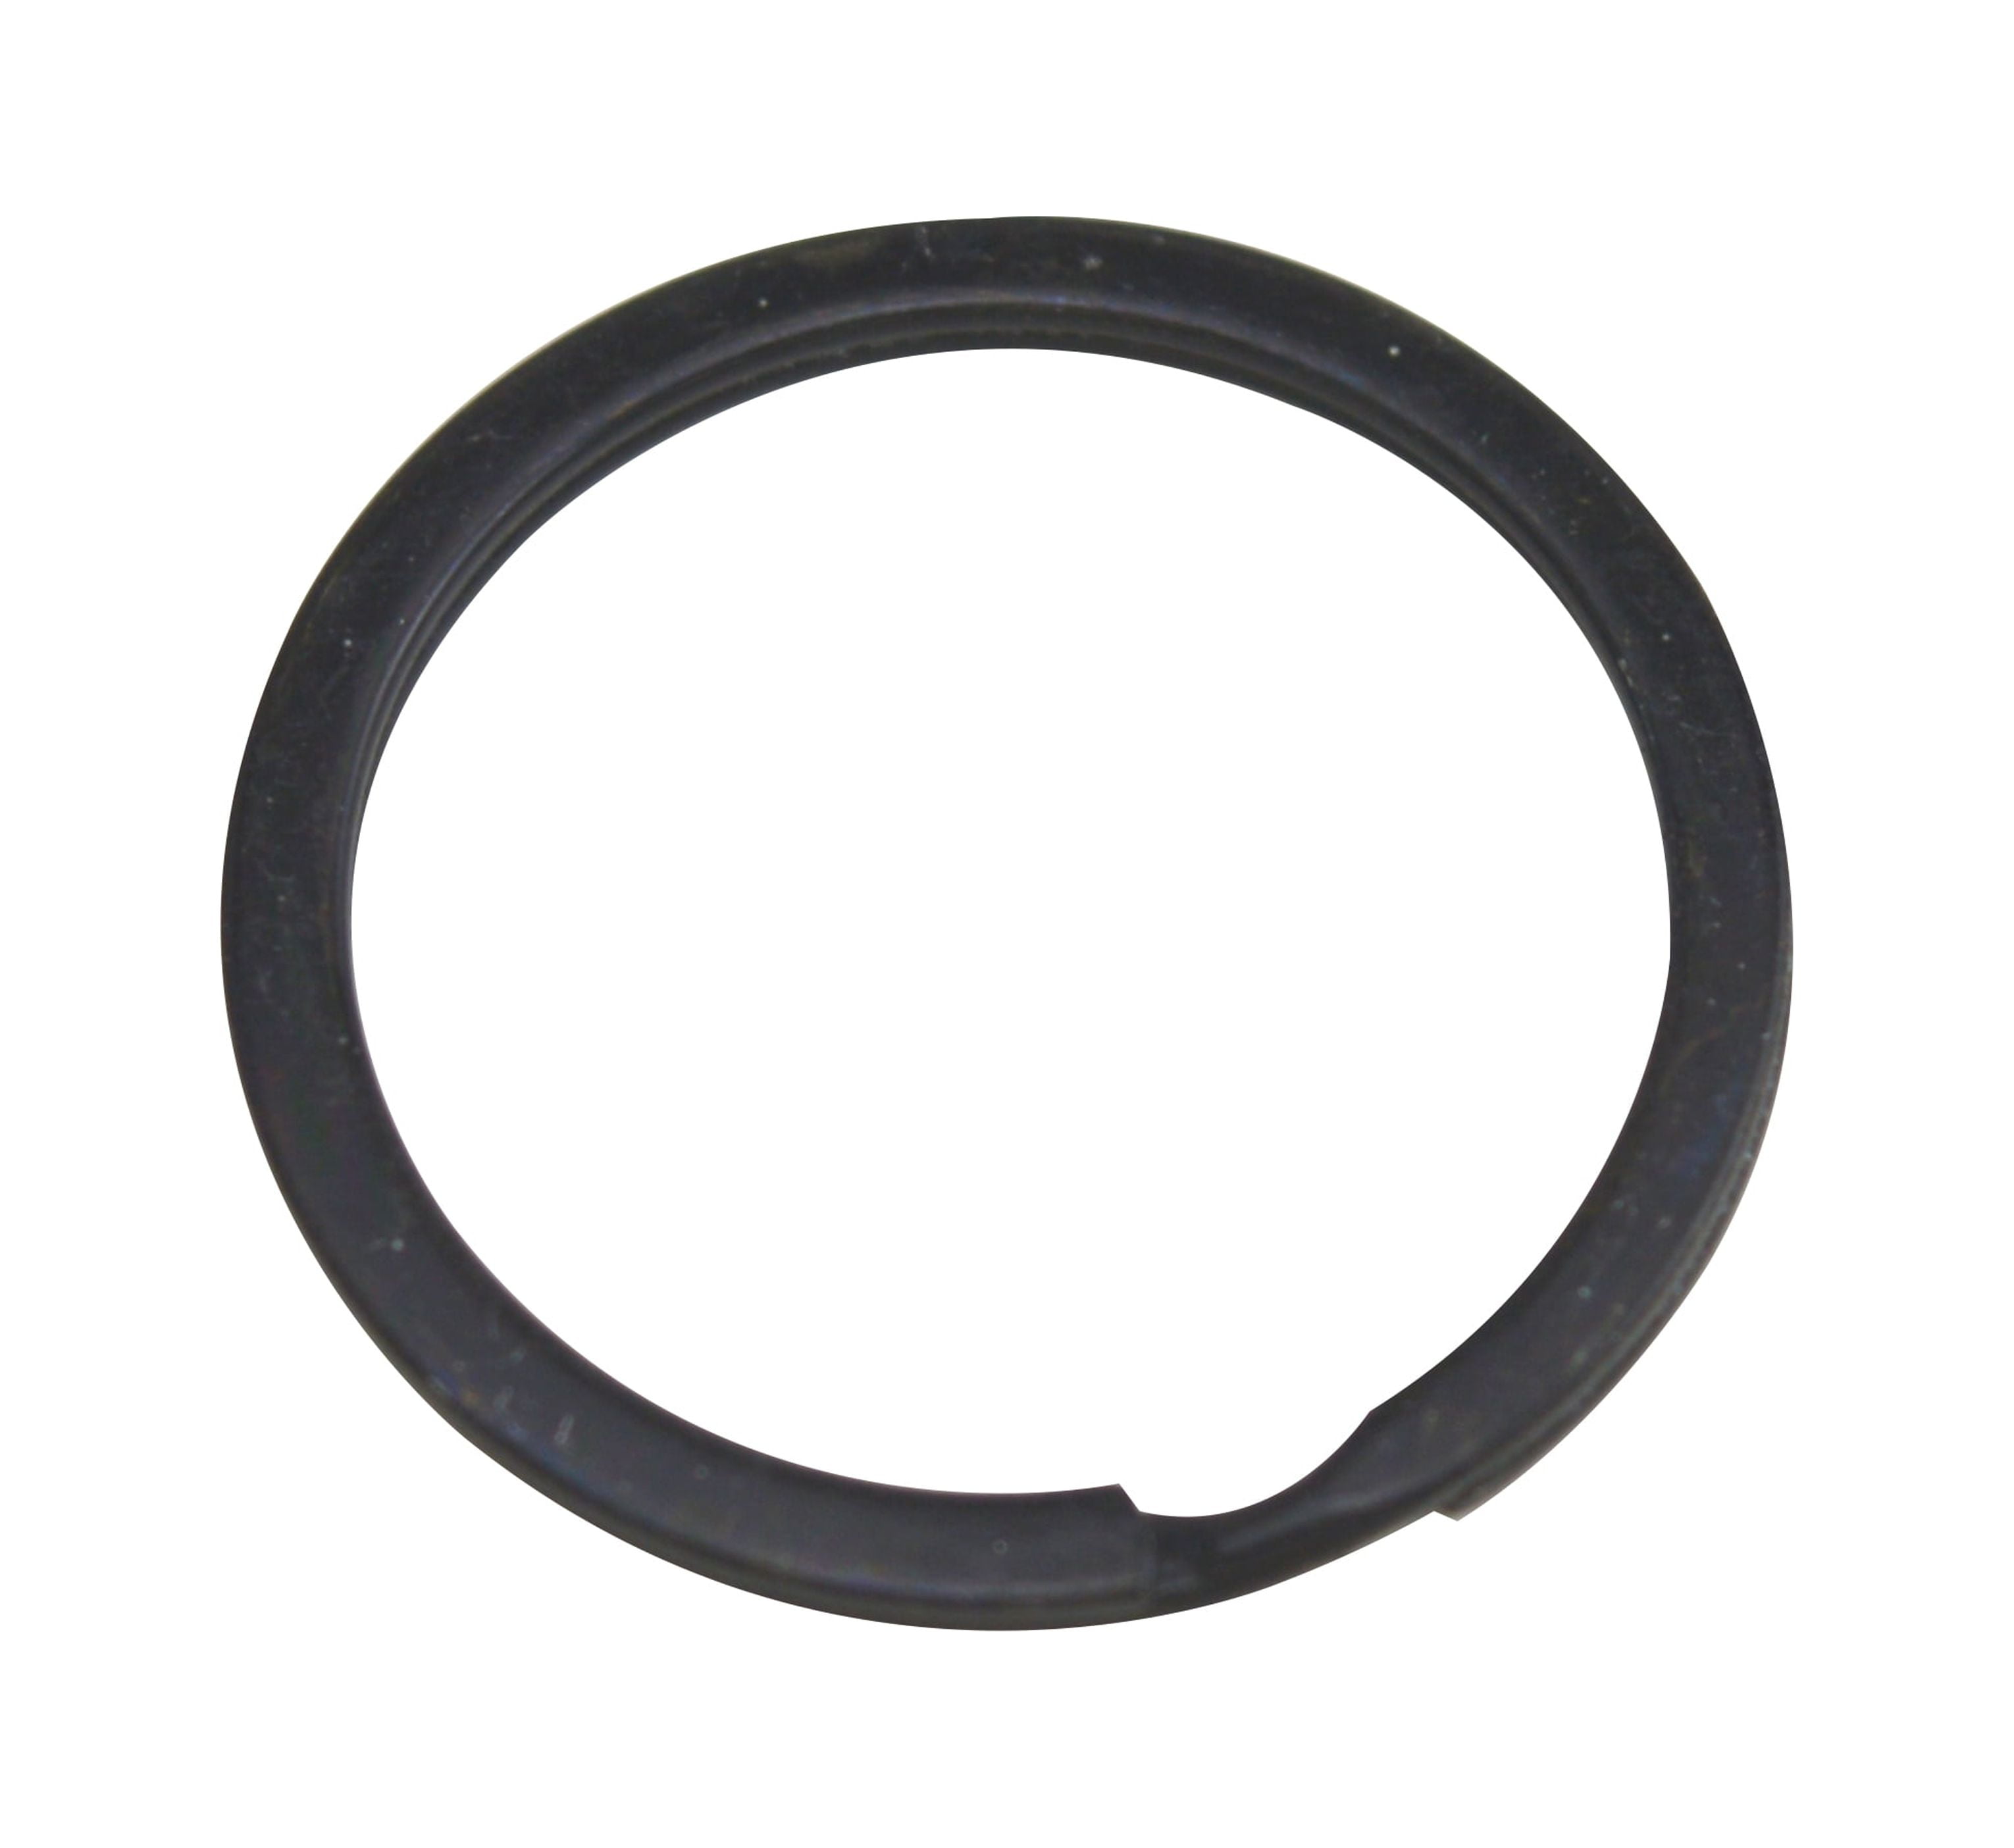 Fenggtonqii Wuuycoky 30mm Outer Diameter Metal Black Key Rings Flat Surface Split Ring Pack of 50, Adult Unisex, Size: 30 mm